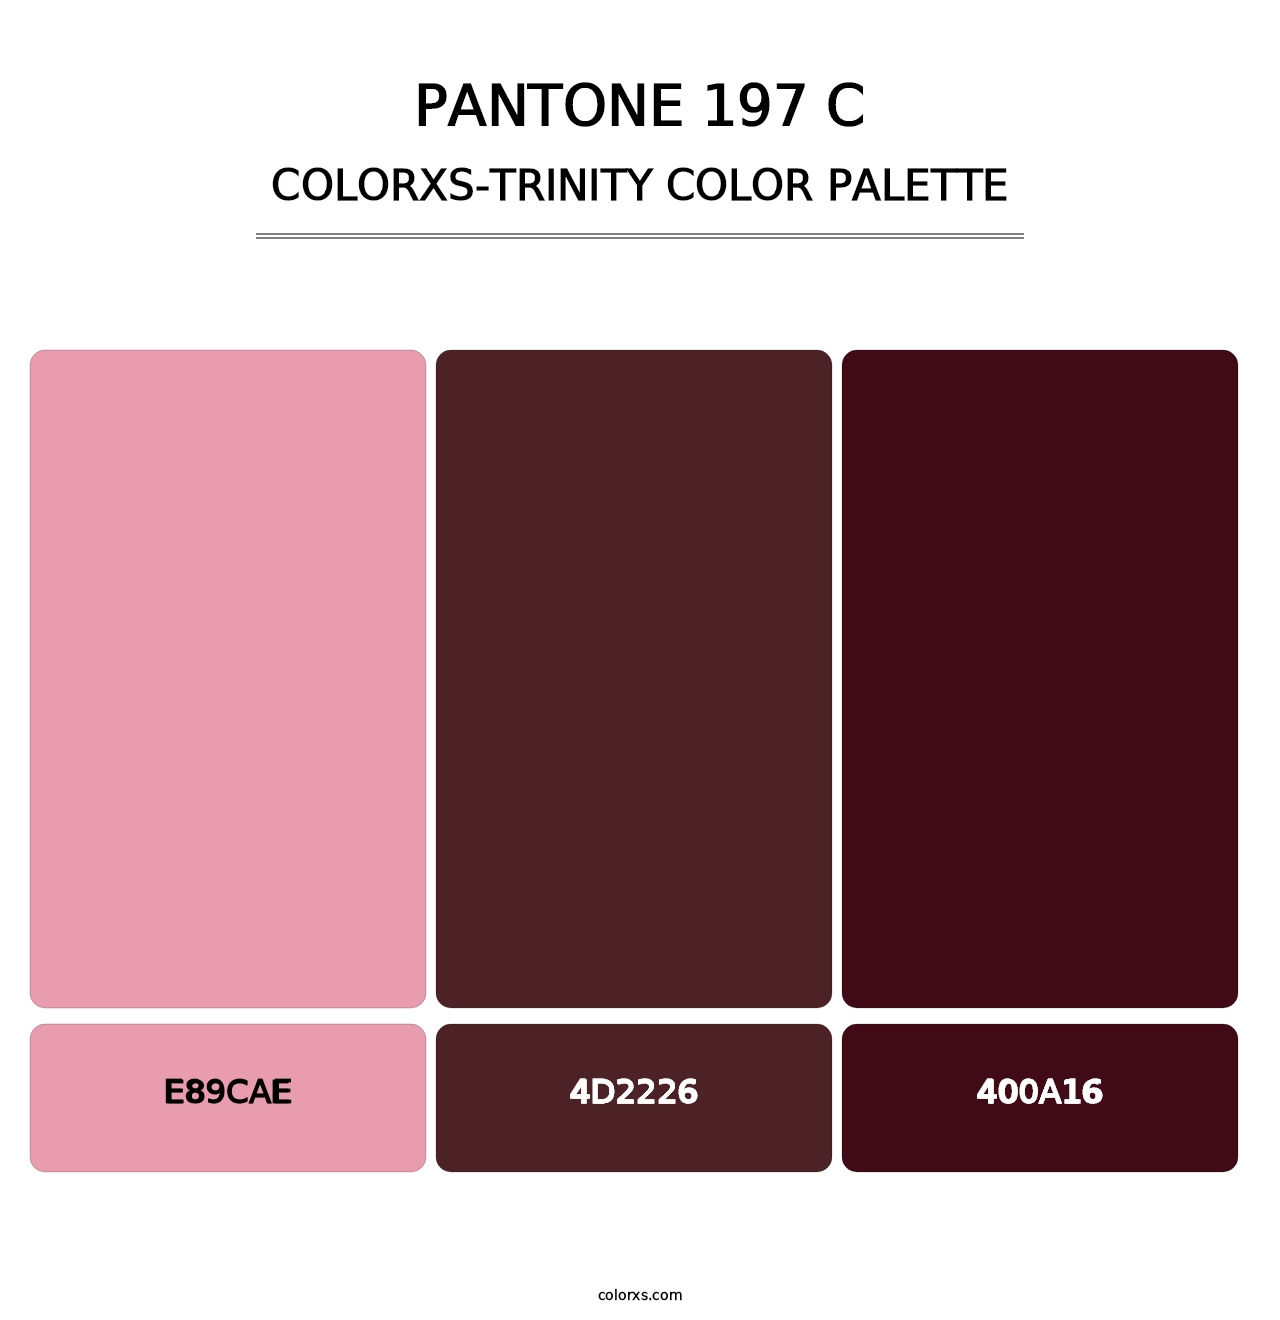 PANTONE 197 C - Colorxs Trinity Palette